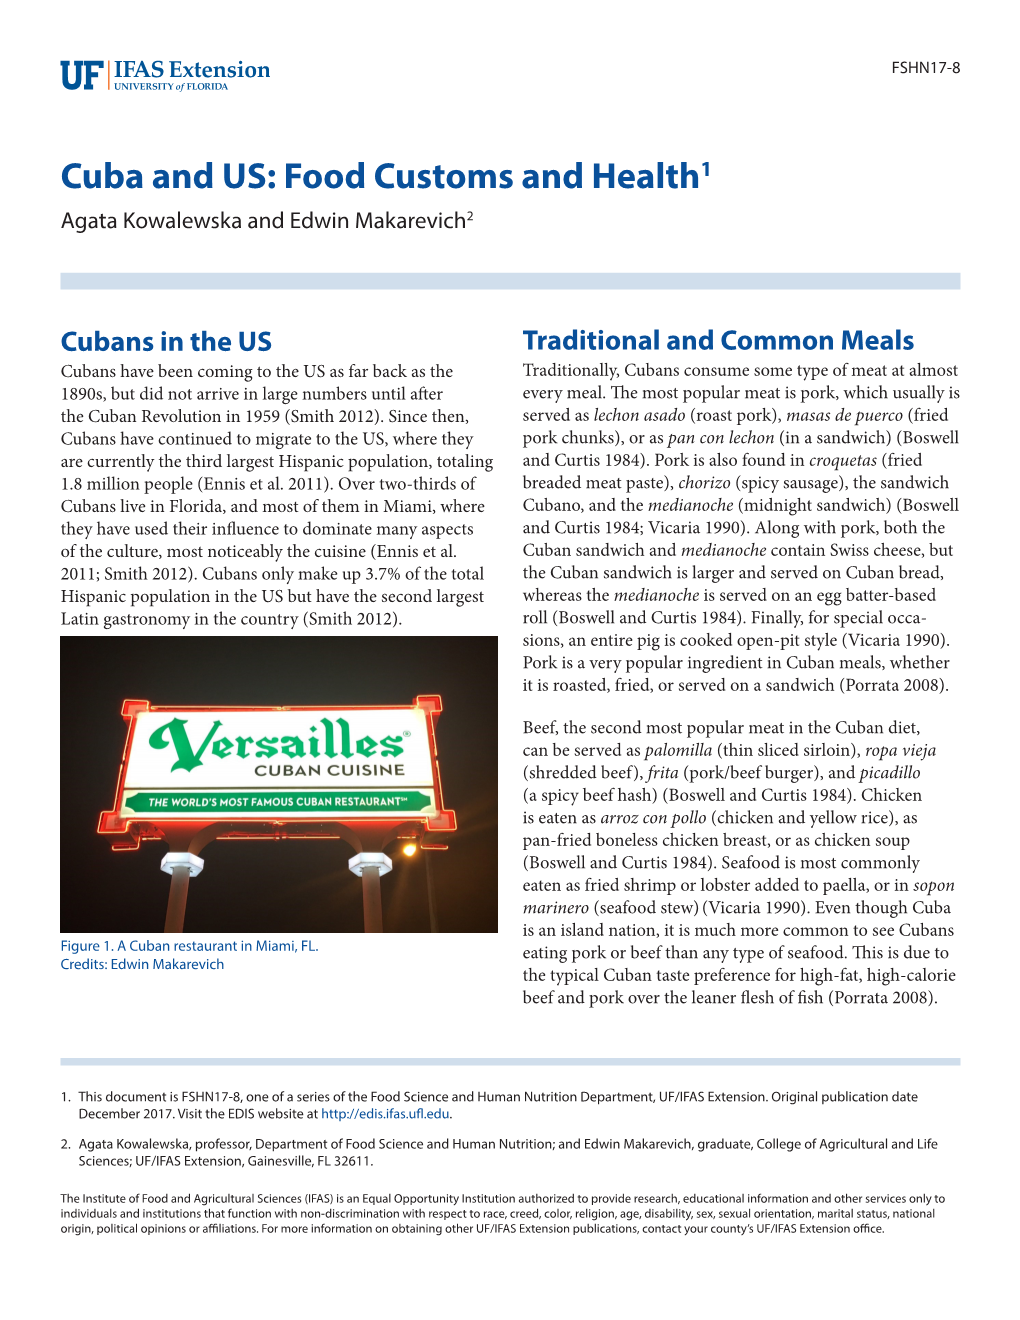 Cuba and US: Food Customs and Health1 Agata Kowalewska and Edwin Makarevich2